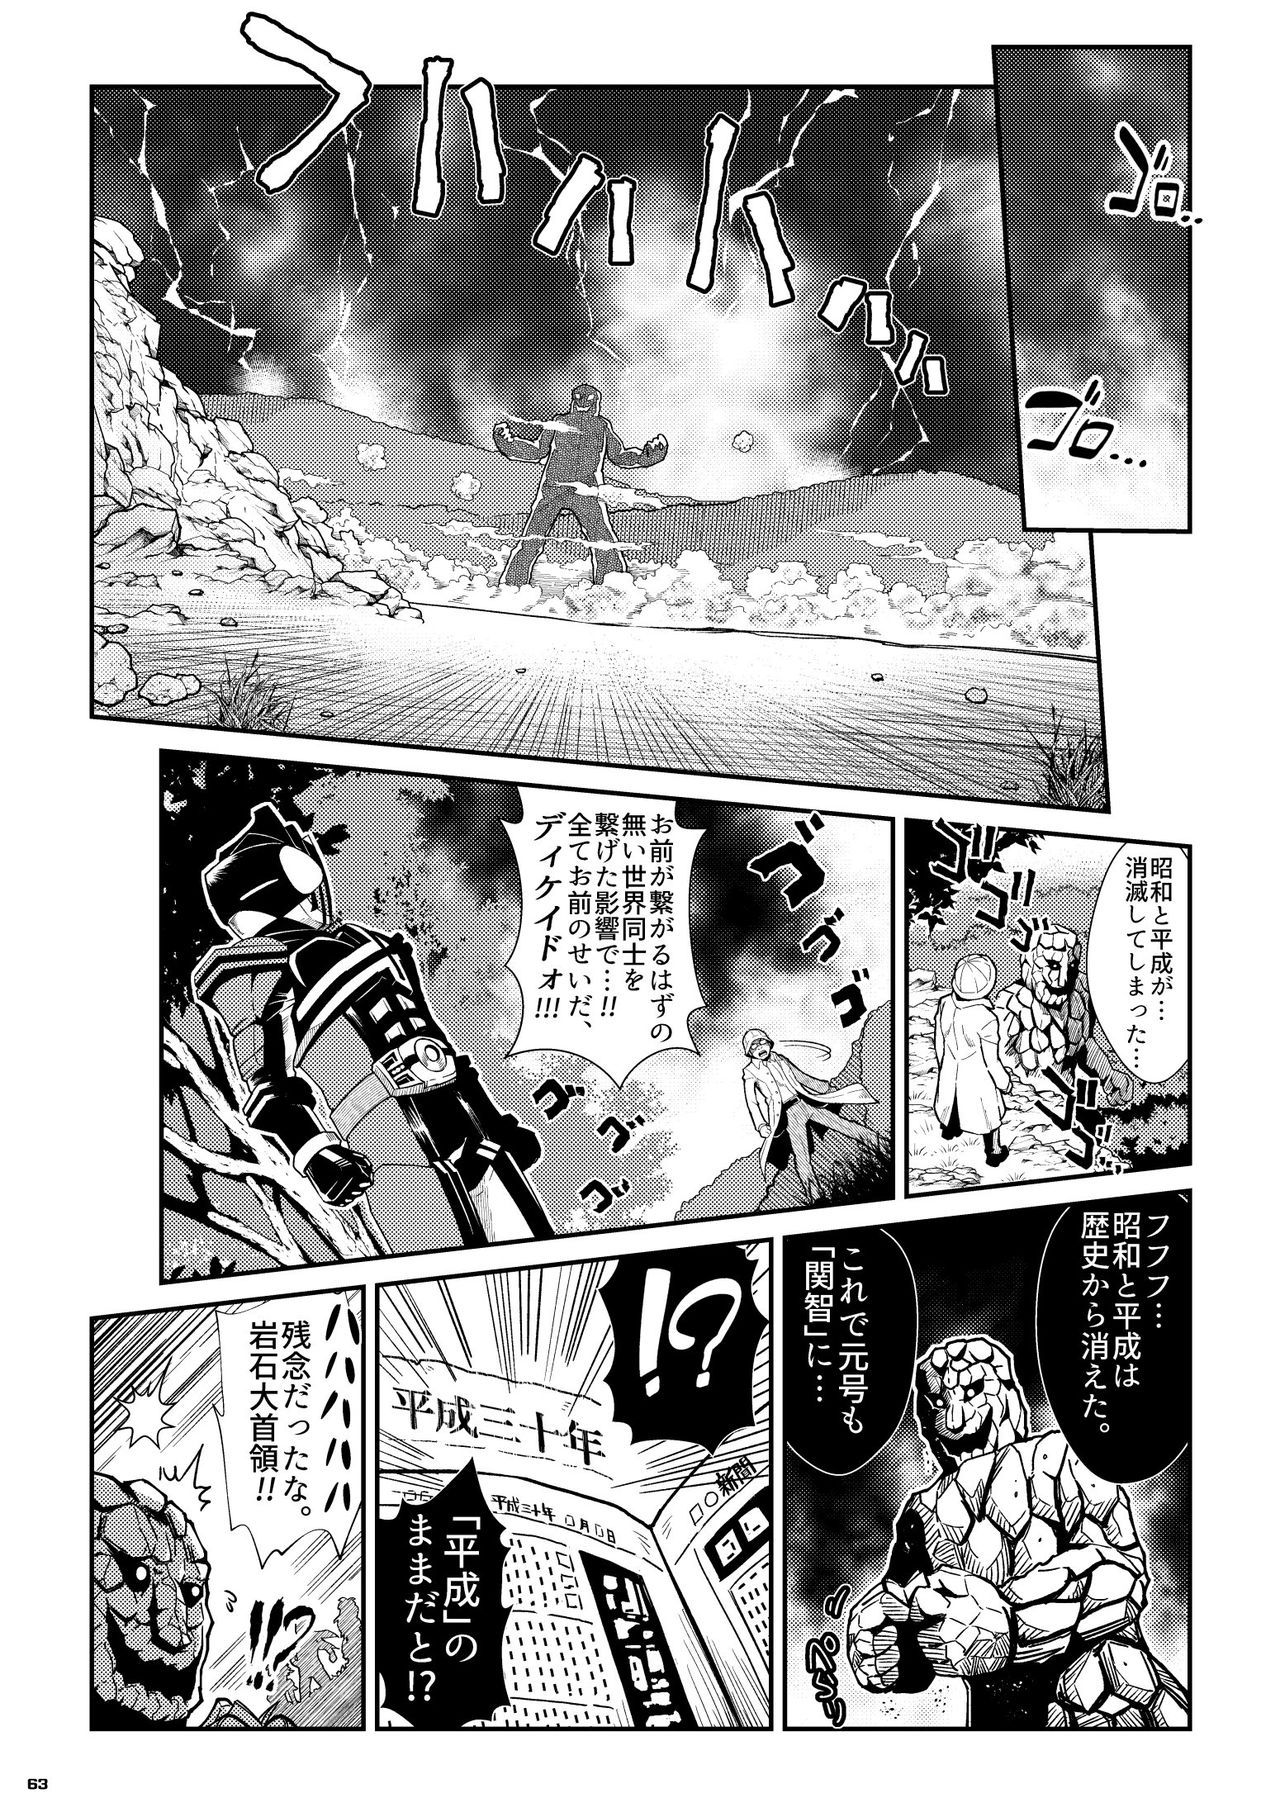 Heisei Precure vs Showa Raider Anthology Battle (Shin Nankai Daikessen) [『真・南海大決戦』 (よろず)] 平成プリキュア対昭和ライダー アンソロジー大戦 63